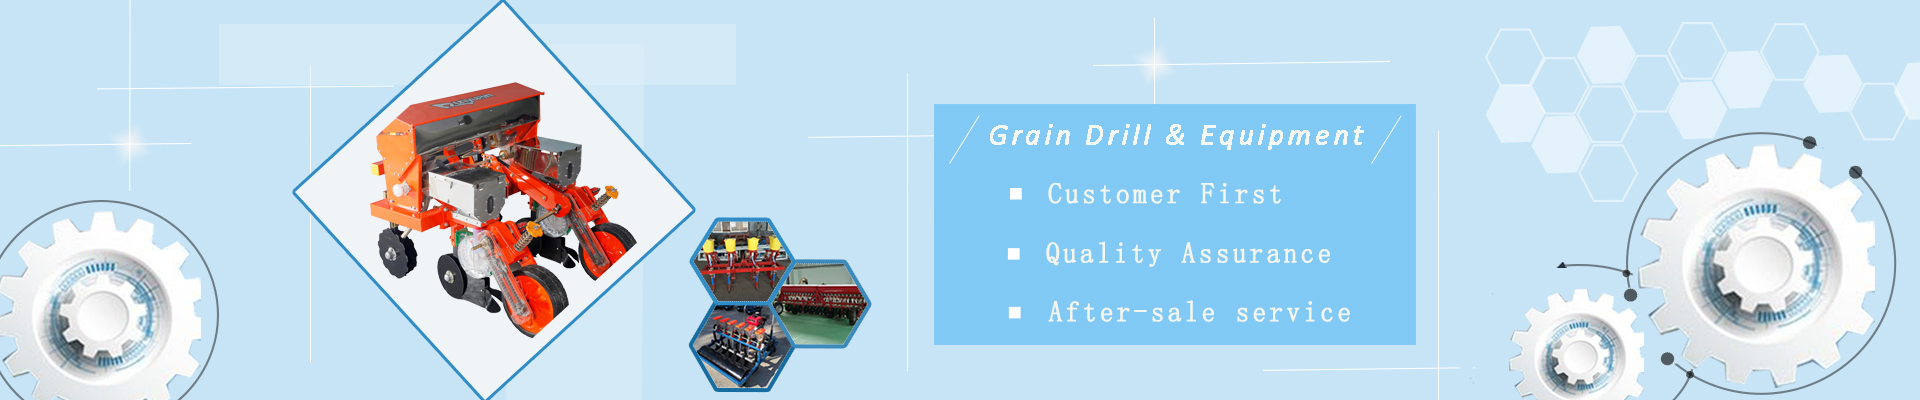 Grain Drill & Equipment